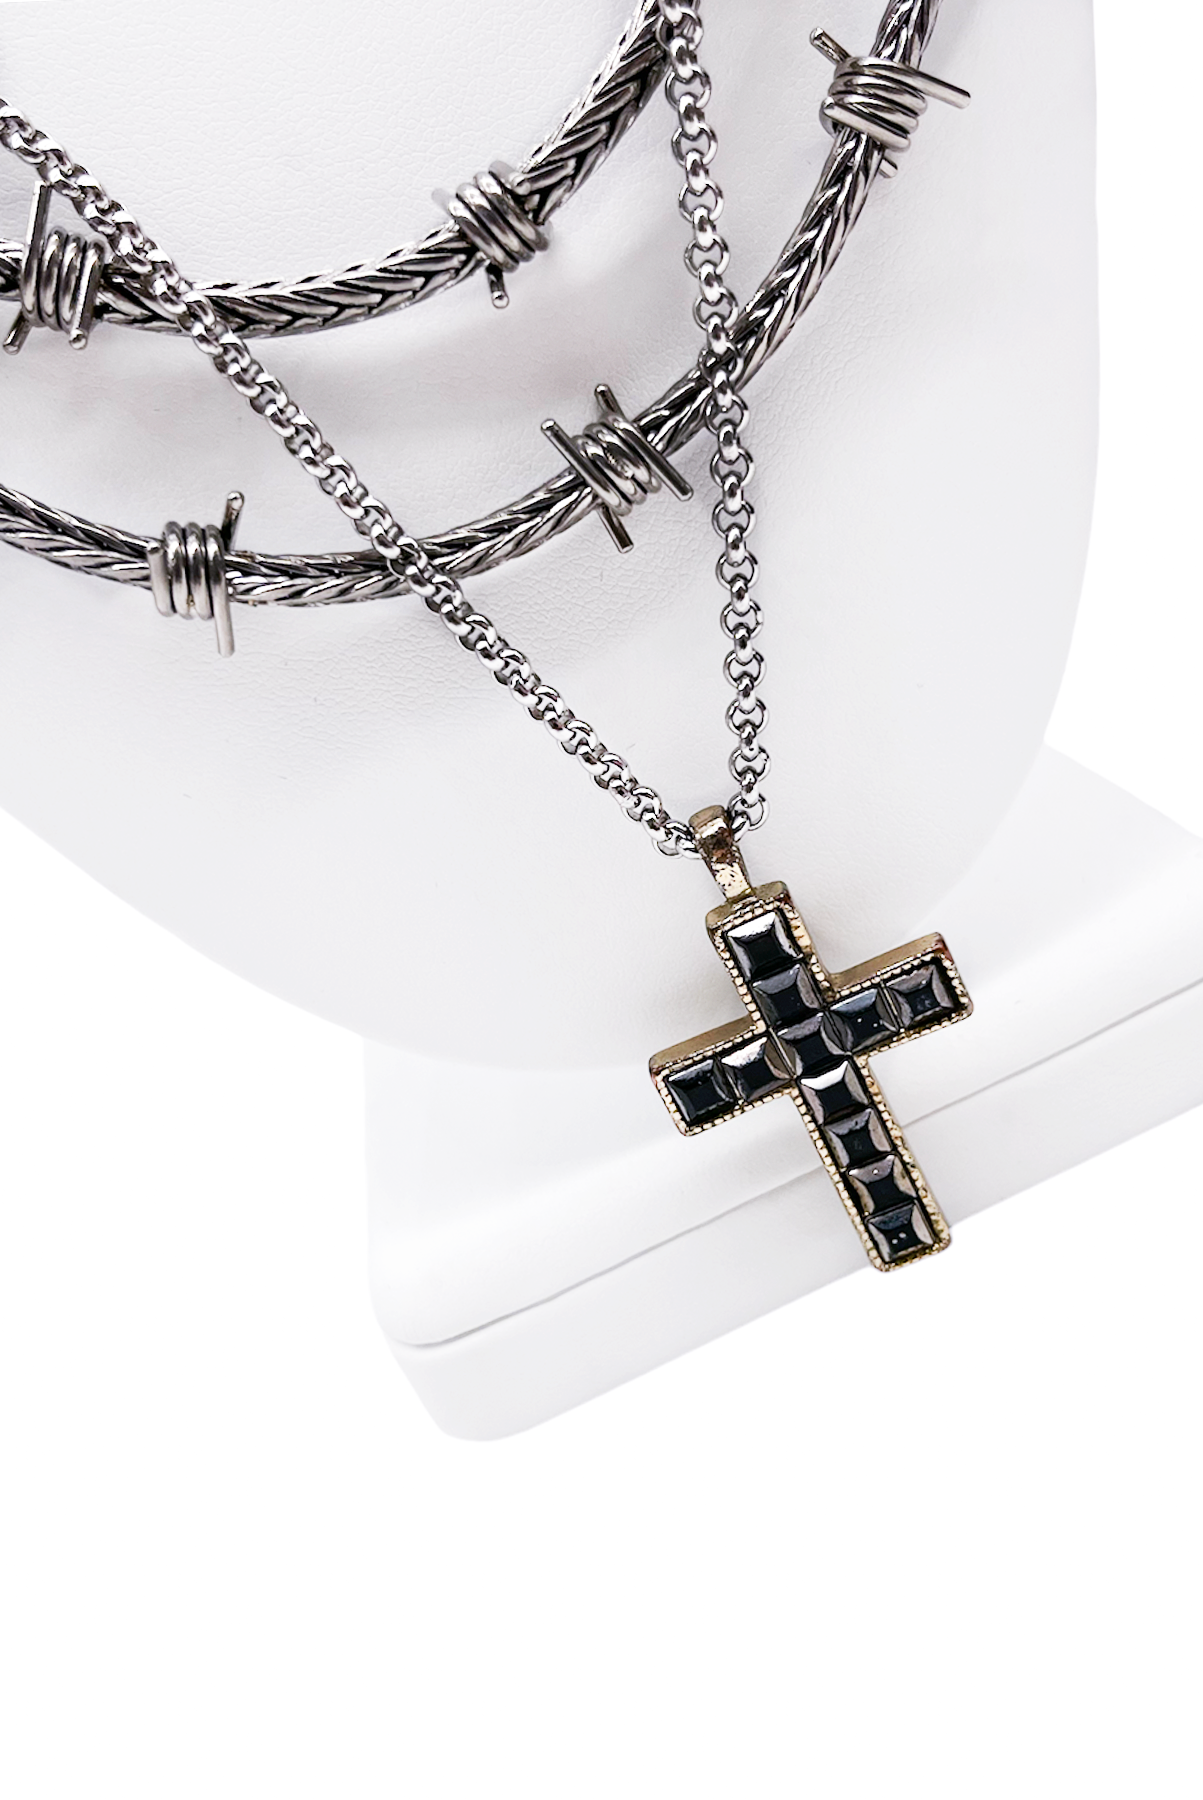 Crown Of Thorns Nail Cross Large Pendant Rhodium Metal Finish Chain Ne –  Forgiven Jewelry